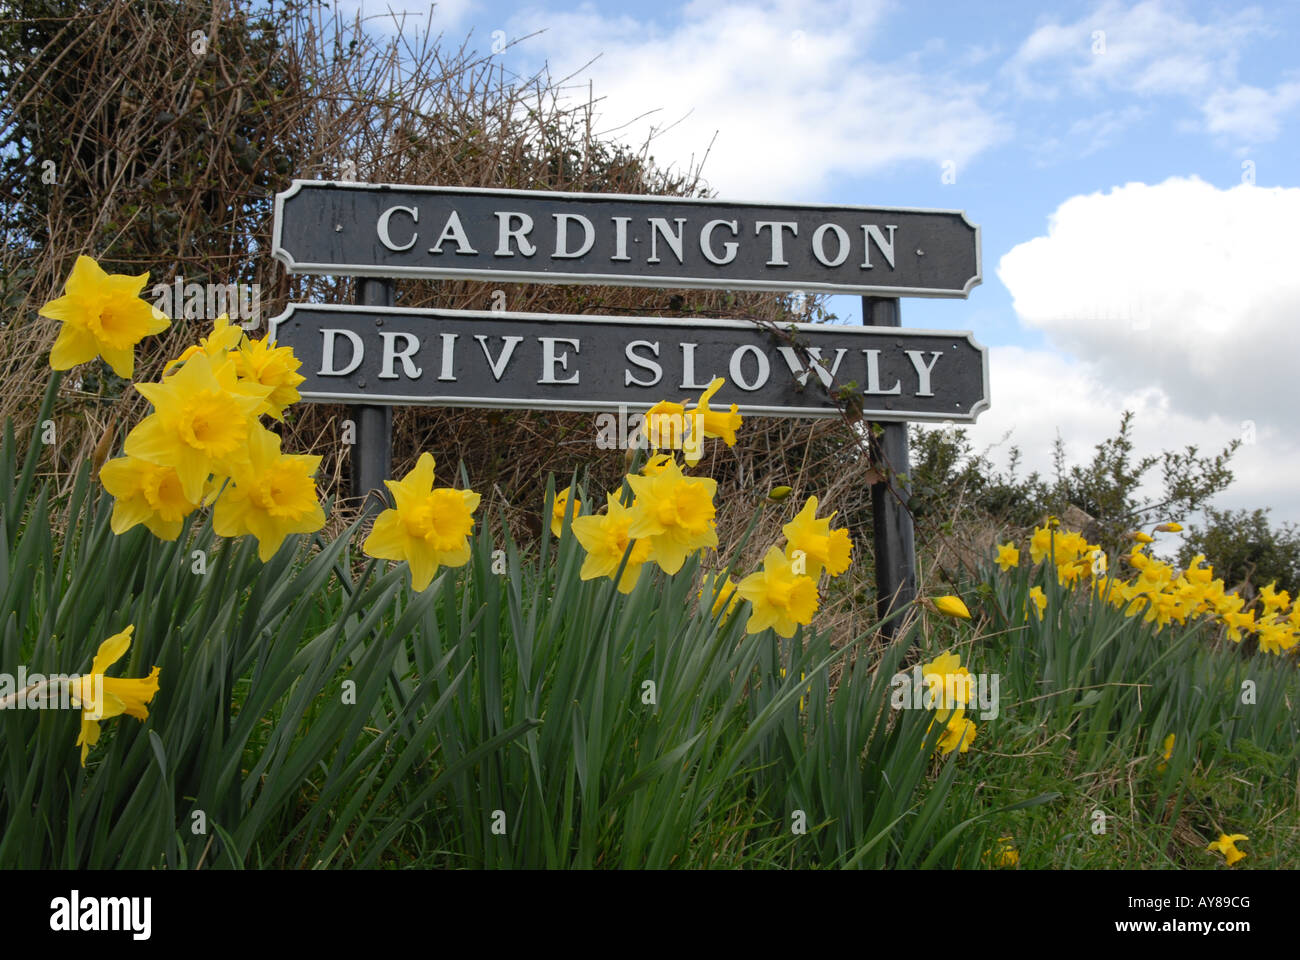 Drive slowly sign at Cardington, near Church Stretton in Shropshire, England Stock Photo